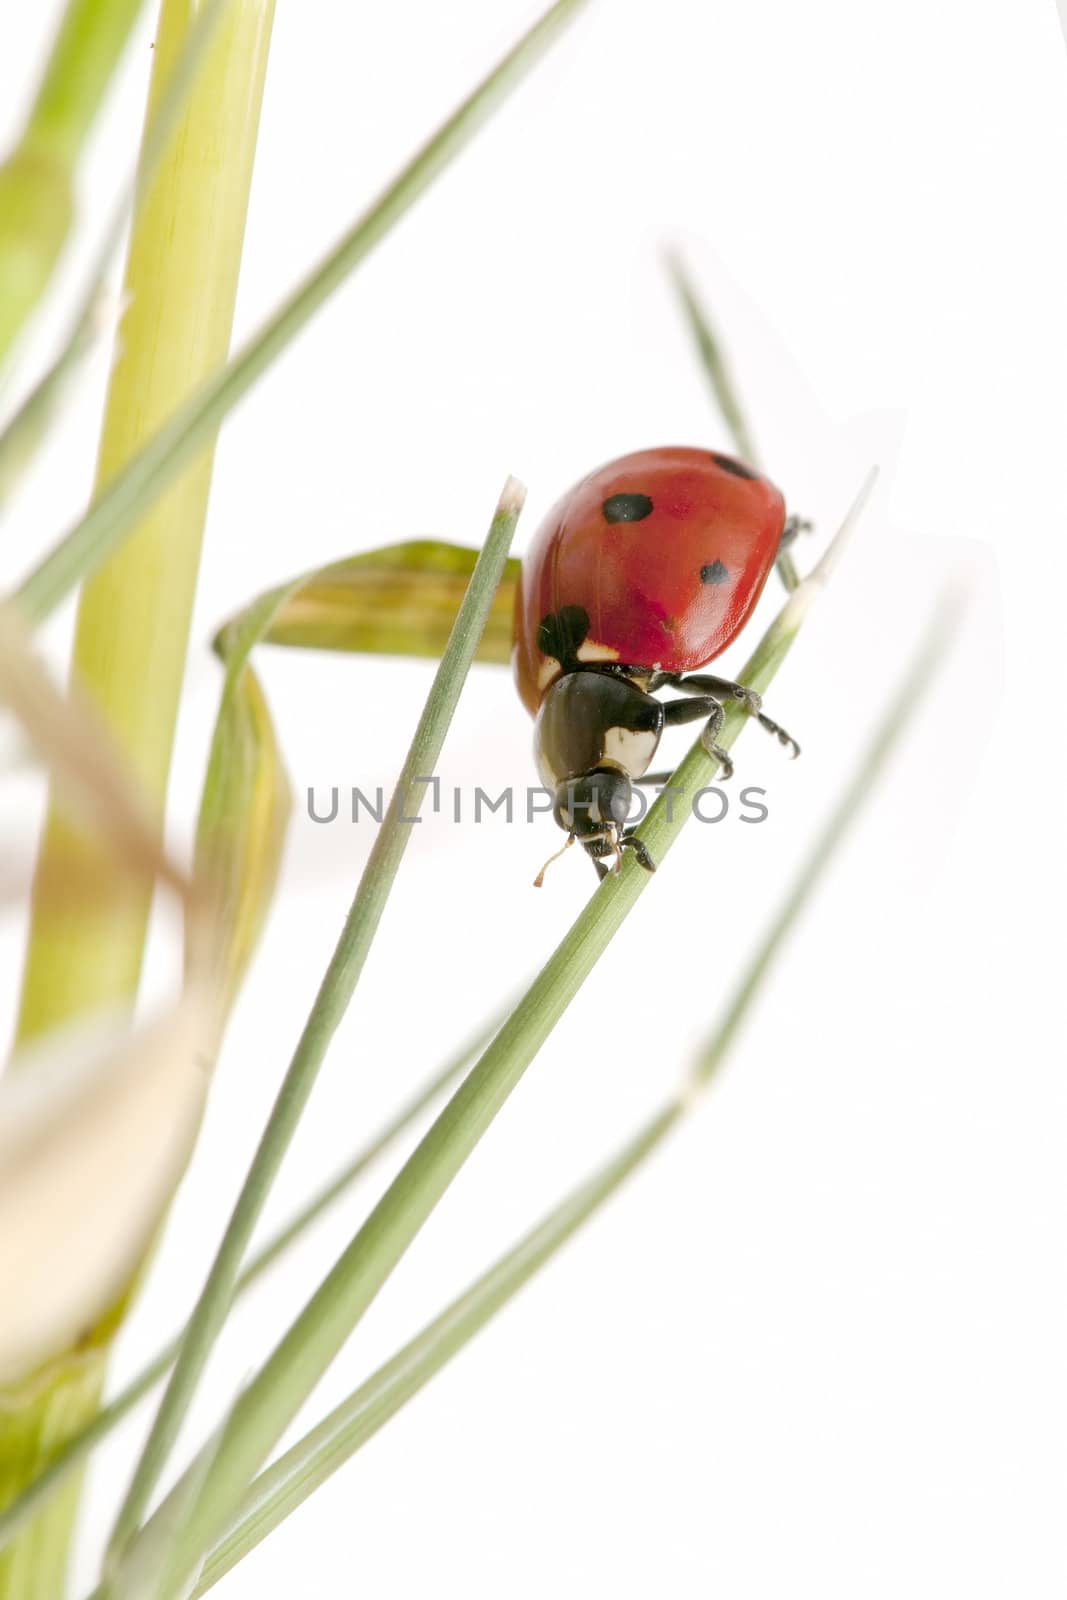 ladybug by luiscar